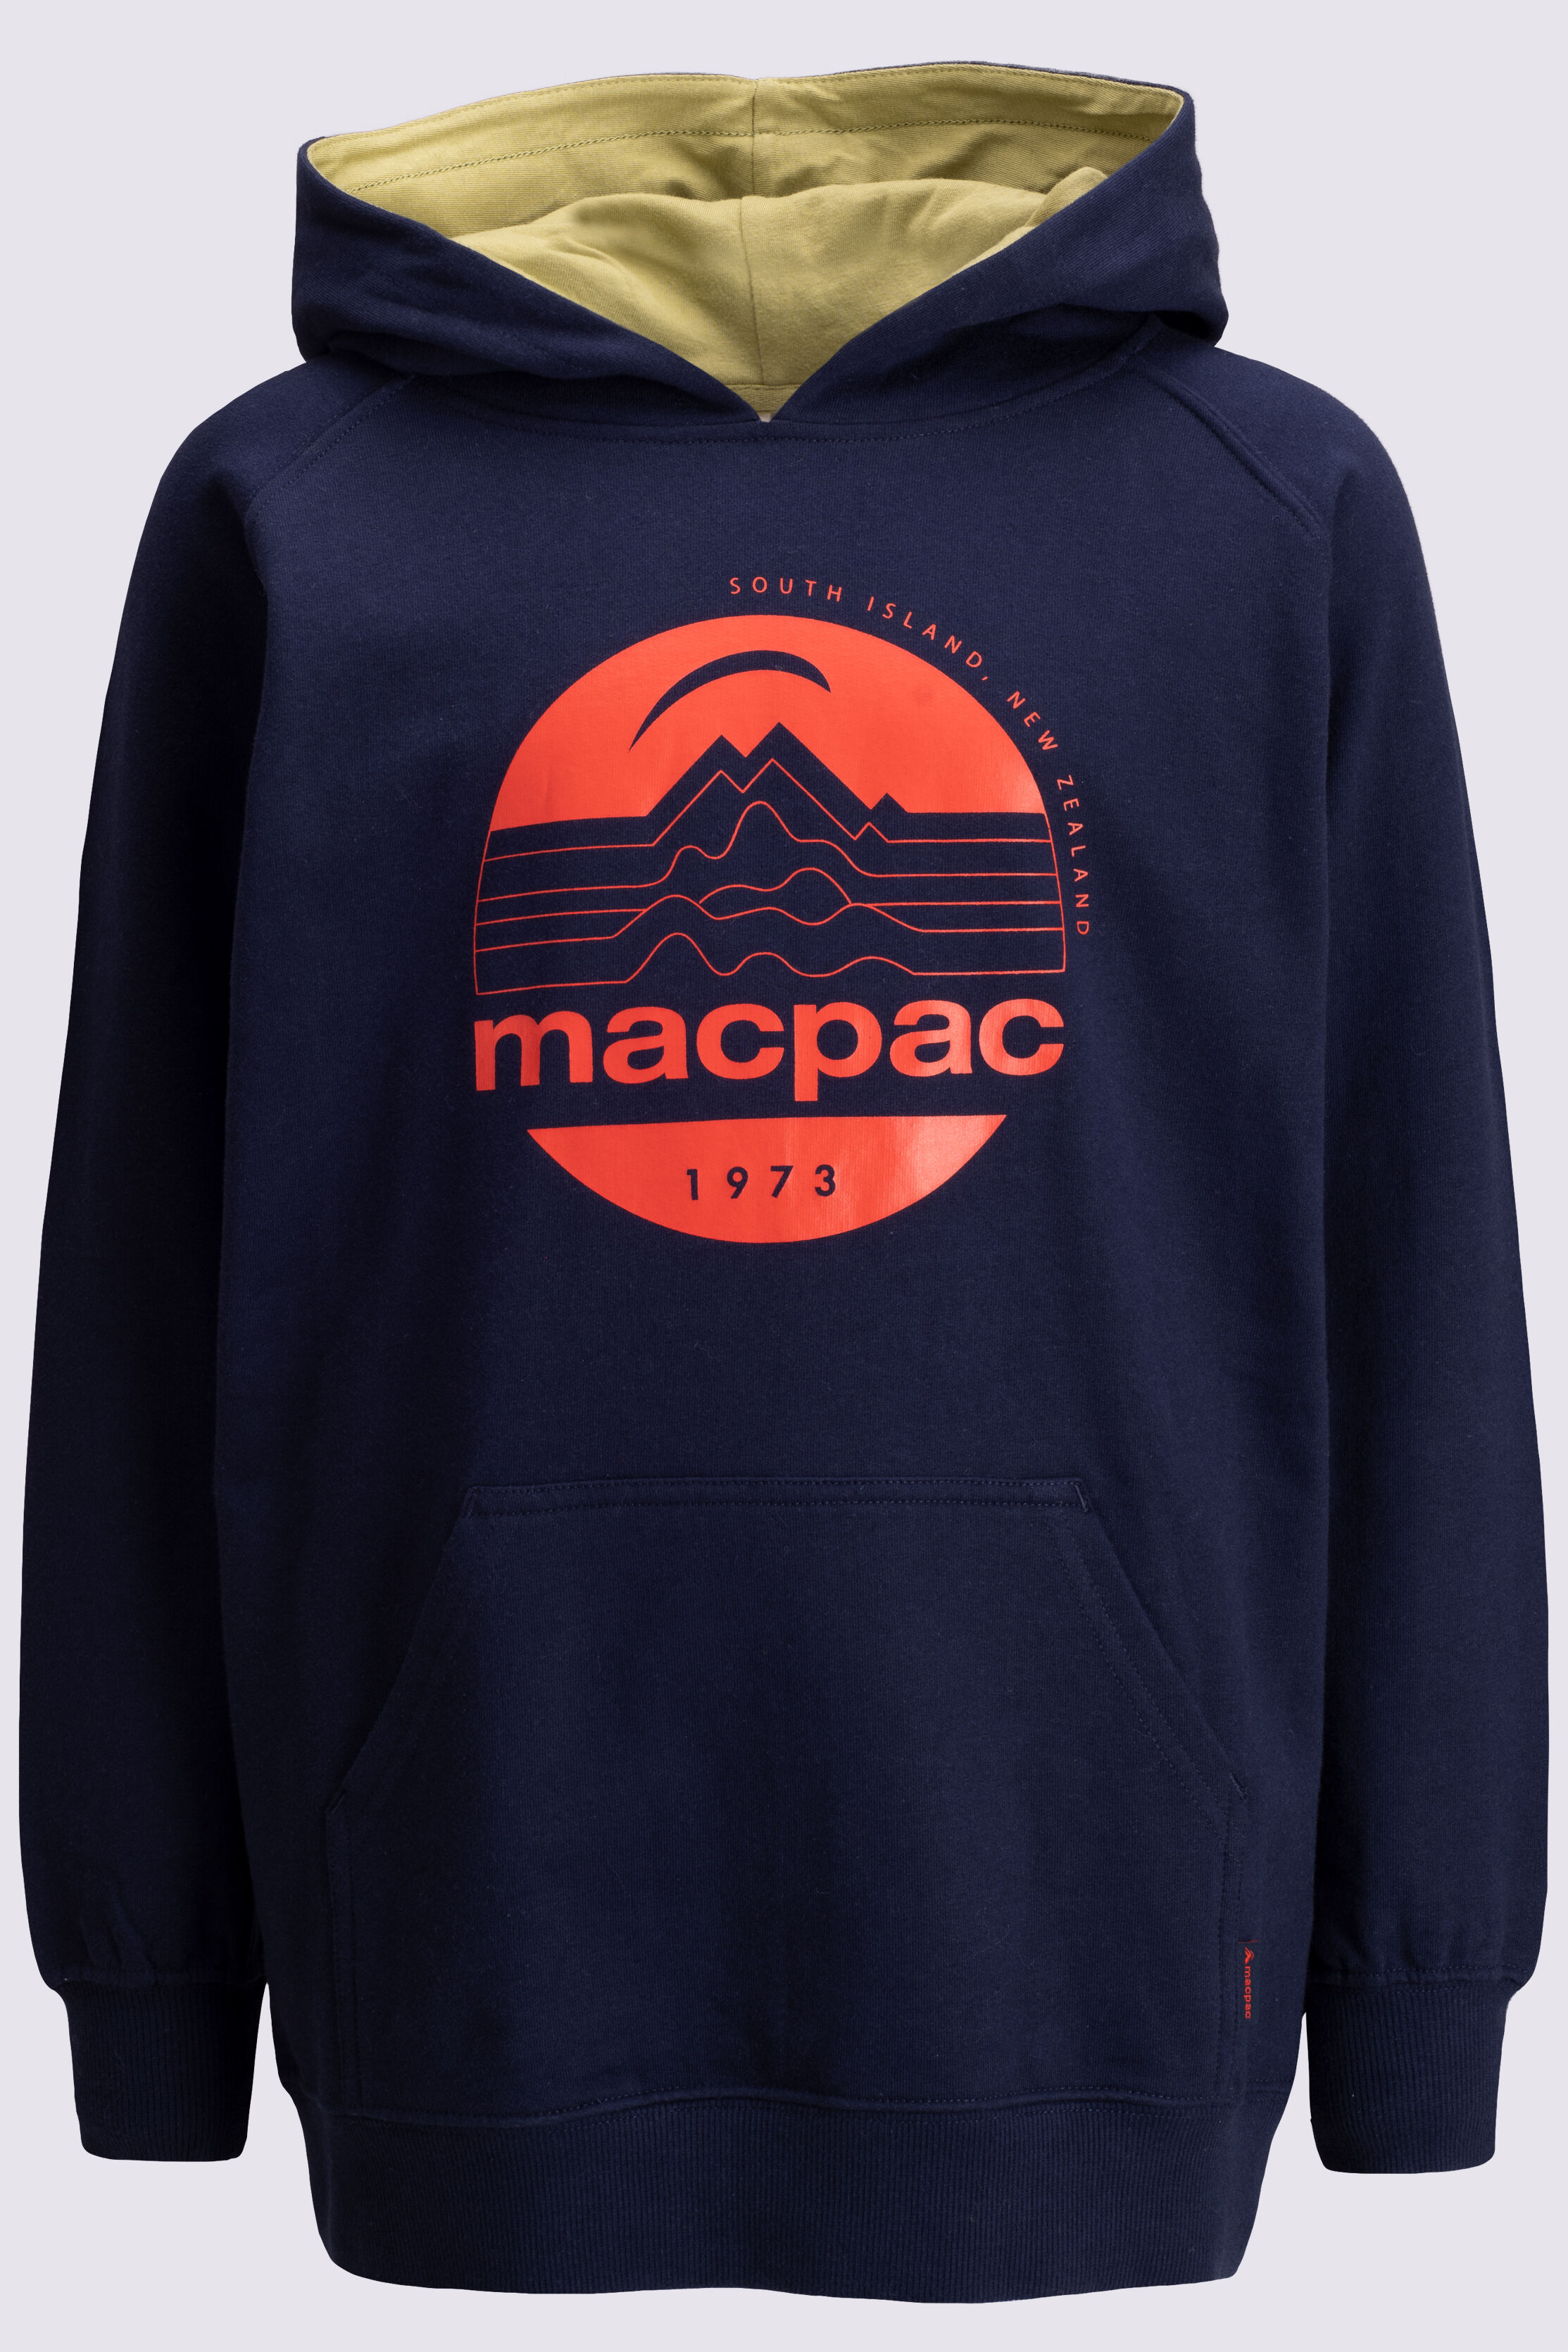 Macpac Kids' Originals Vintage Fleece Pullover